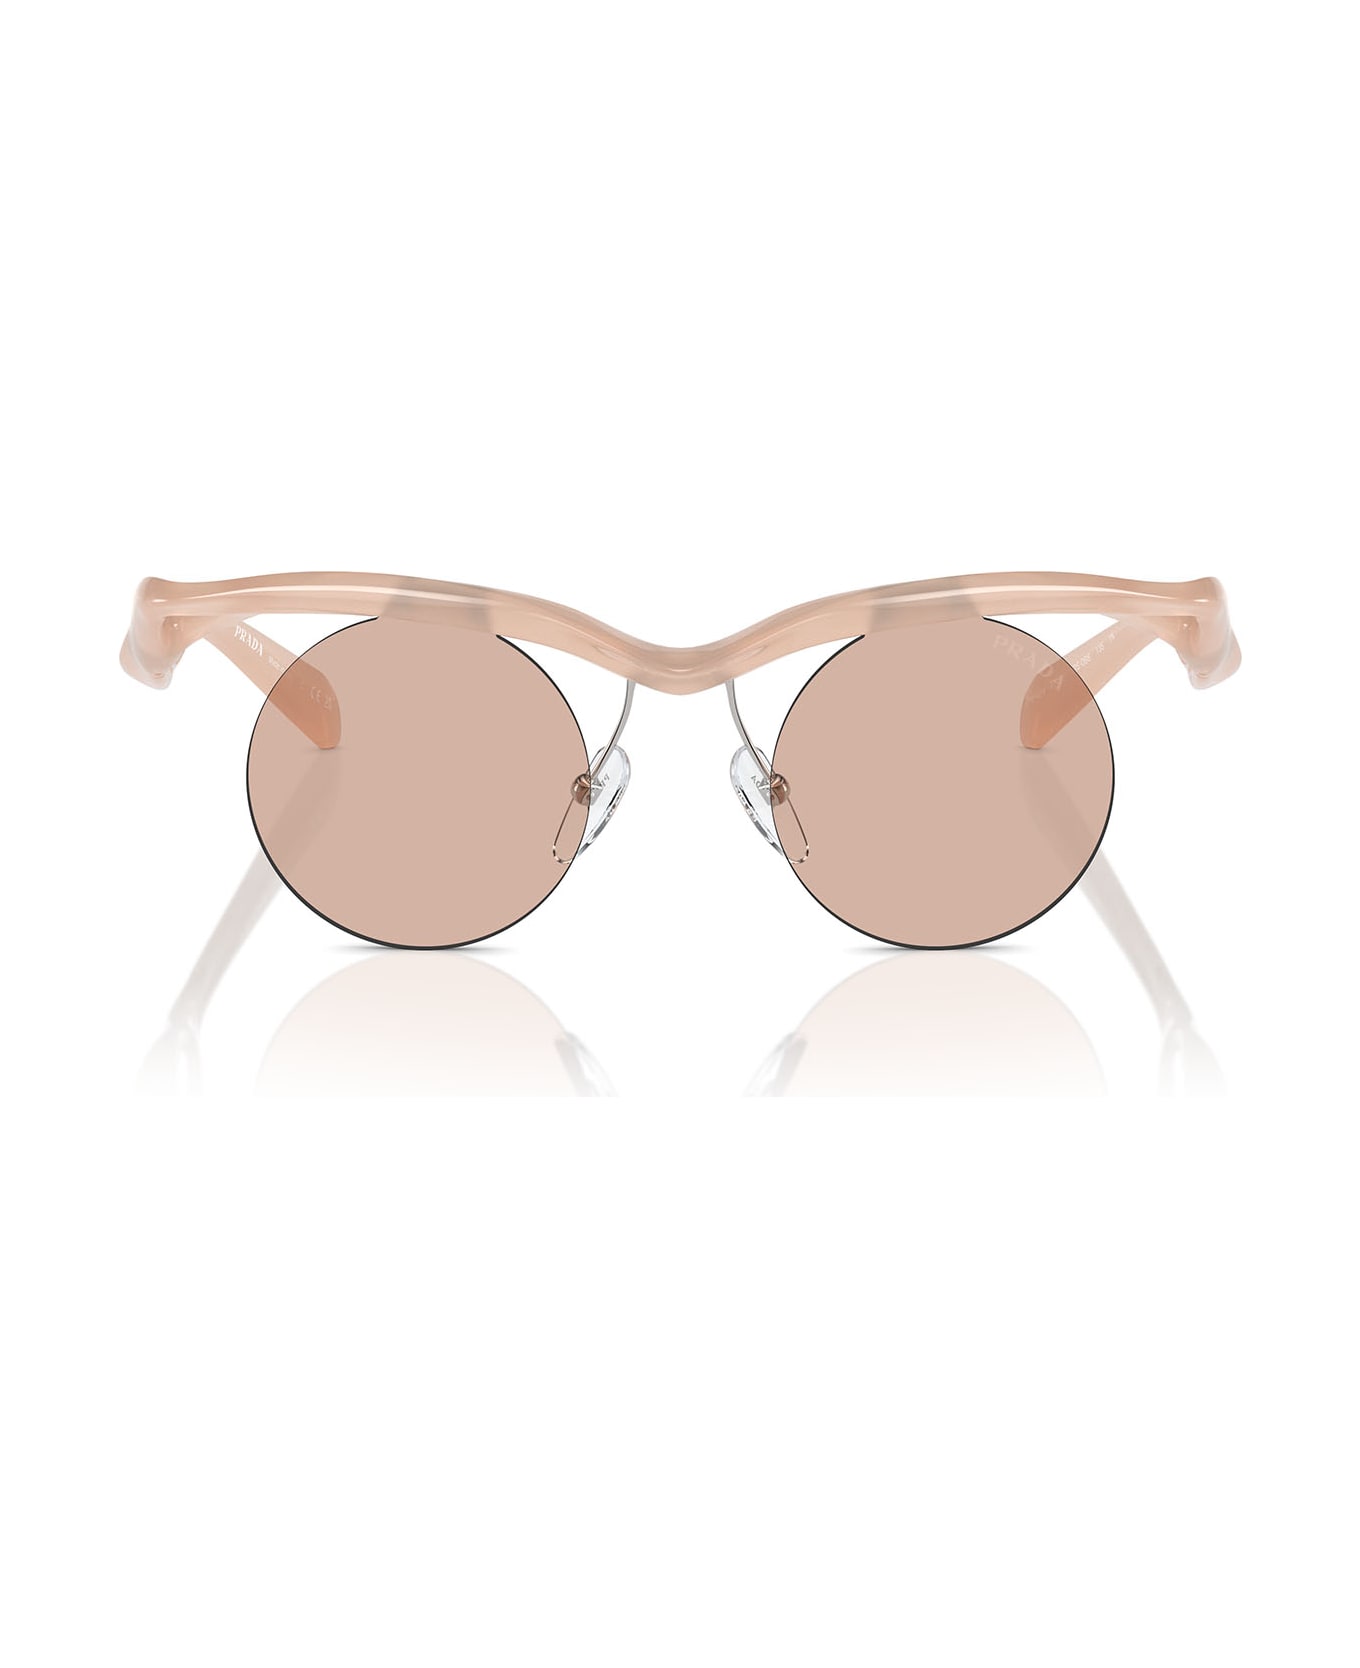 Prada Eyewear Pr A24s Opal Peach Sunglasses - Opal Peach